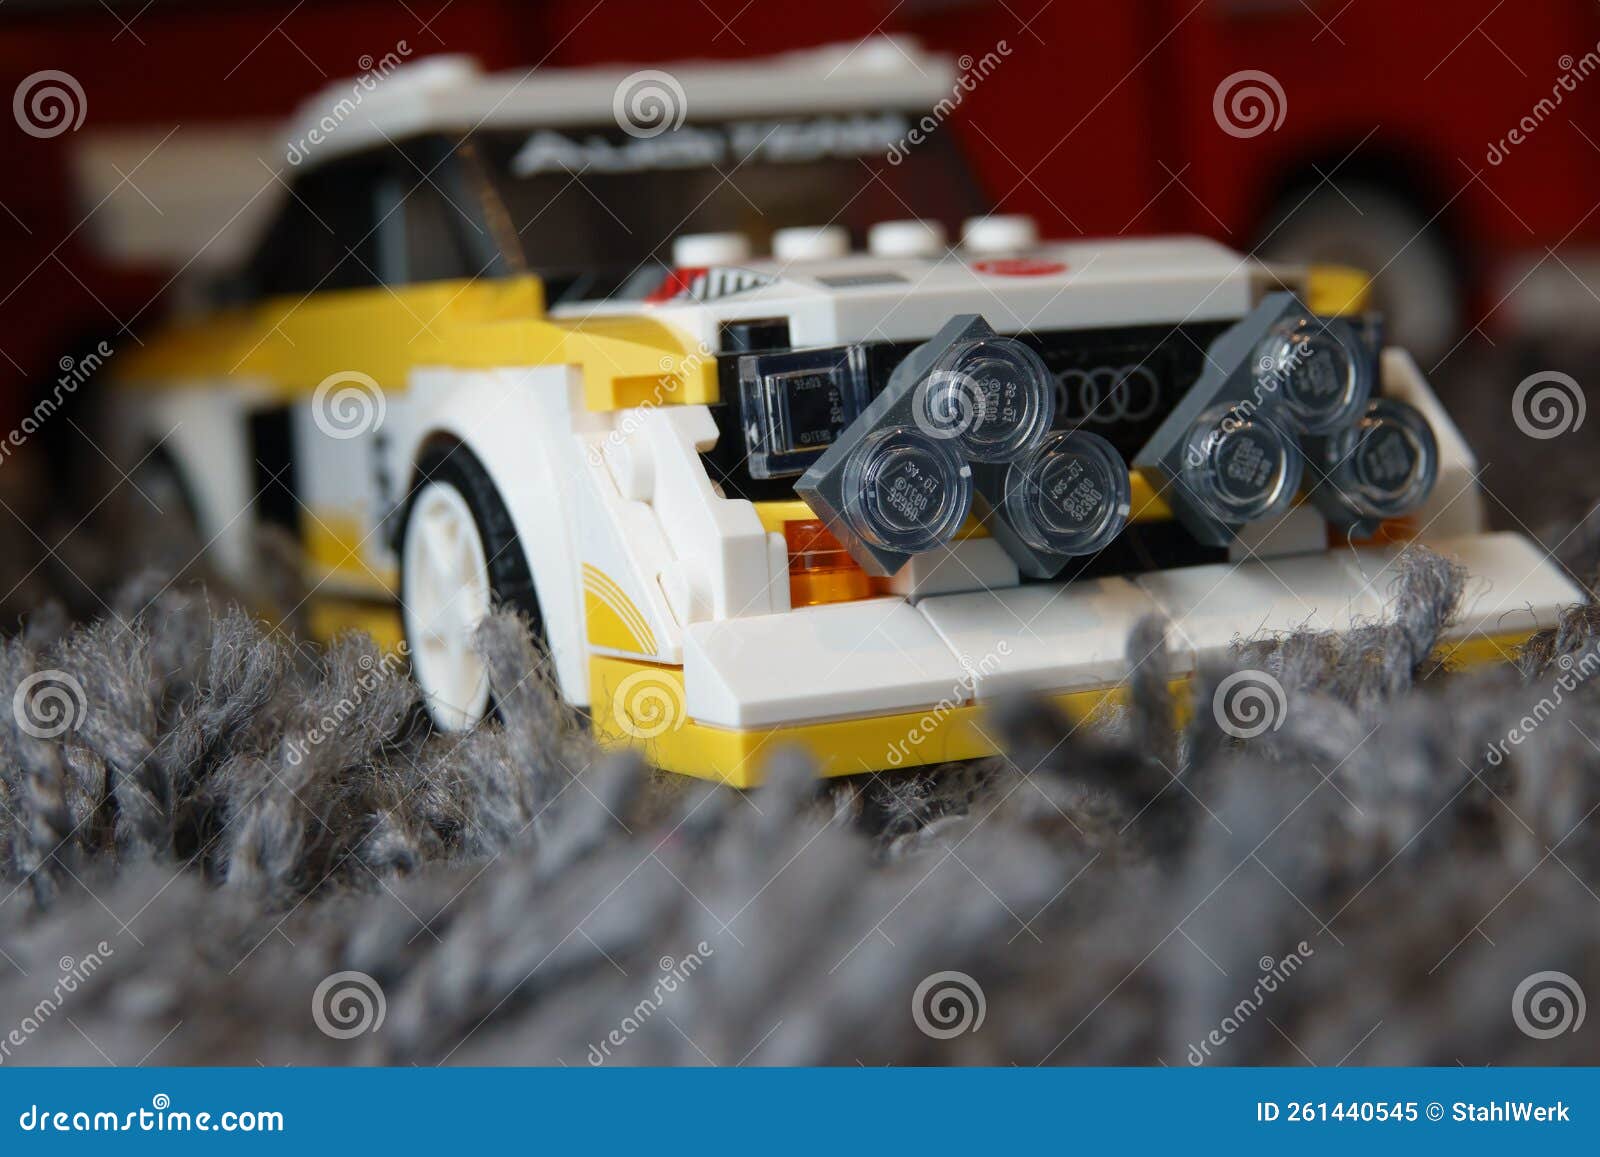 https://thumbs.dreamstime.com/z/photographed-front-slight-angle-car-stands-shaggy-carpet-lego-vw-bulli-background-lego-audi-261440545.jpg